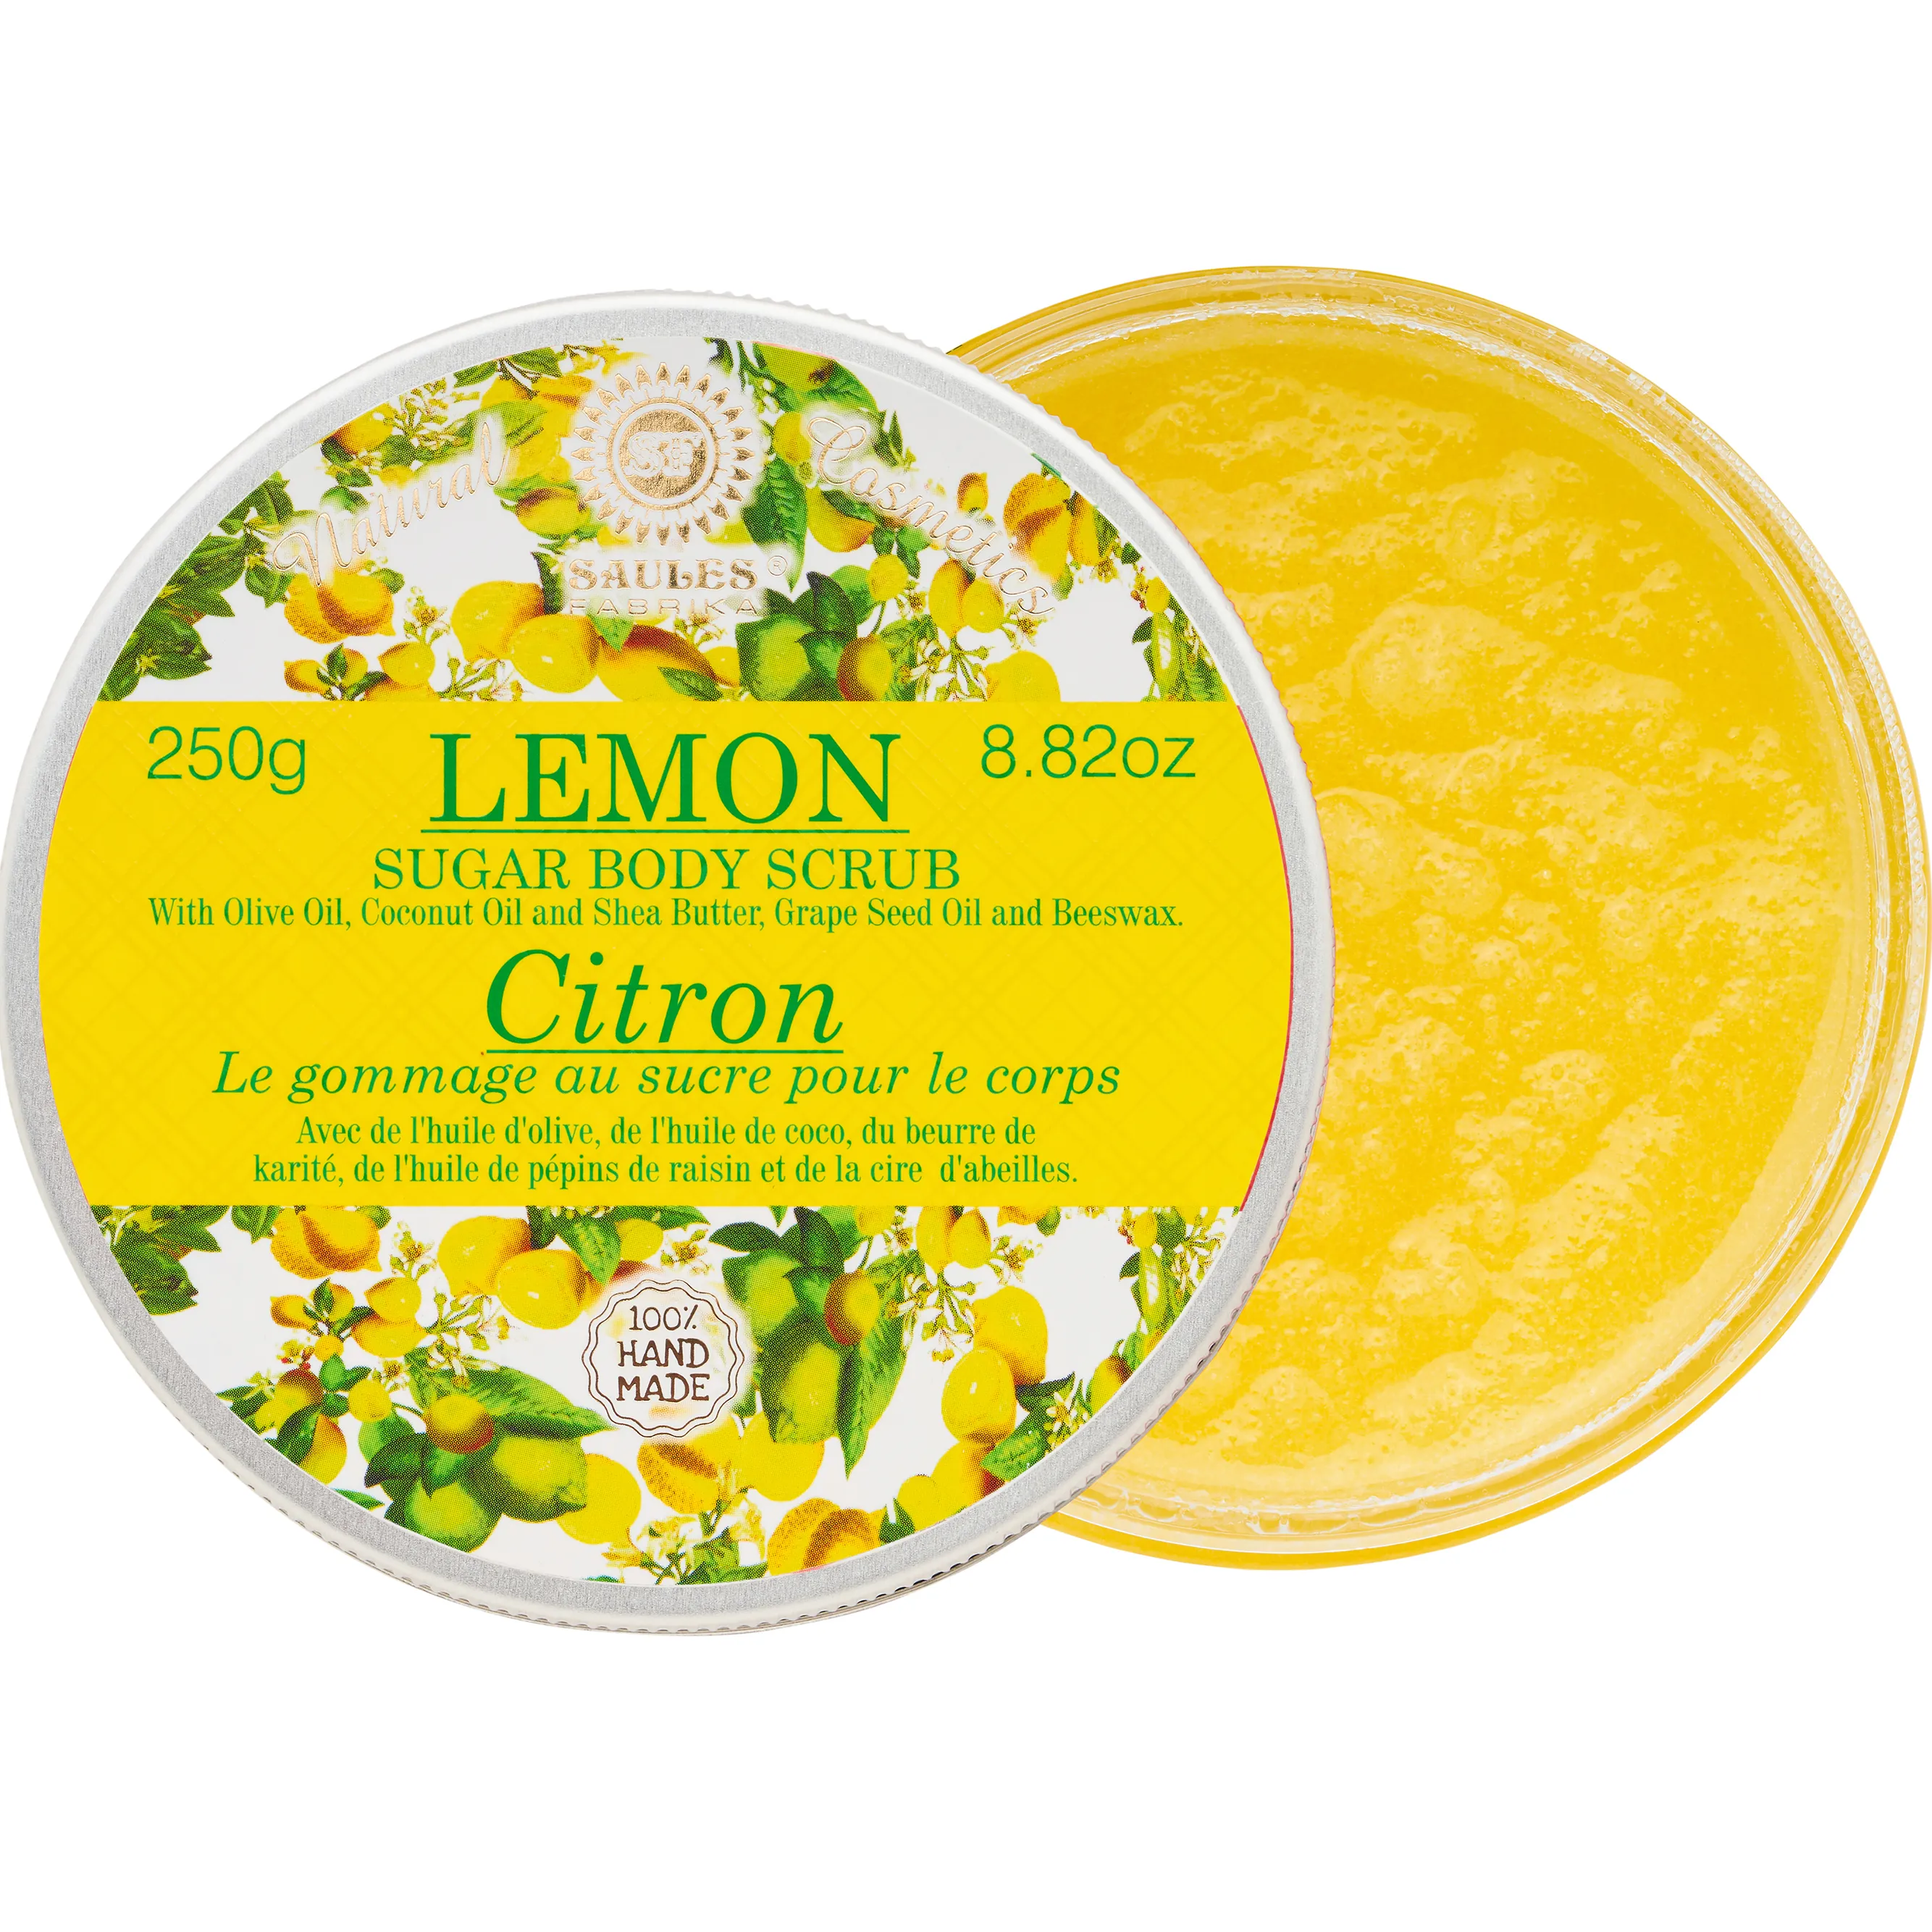 Juicy Lemon Body Scrub Sommer 250g OEM ODM Exklusive Qualität Private Label Großhandel Wunderbares Produkt für Körper energie für den Körper